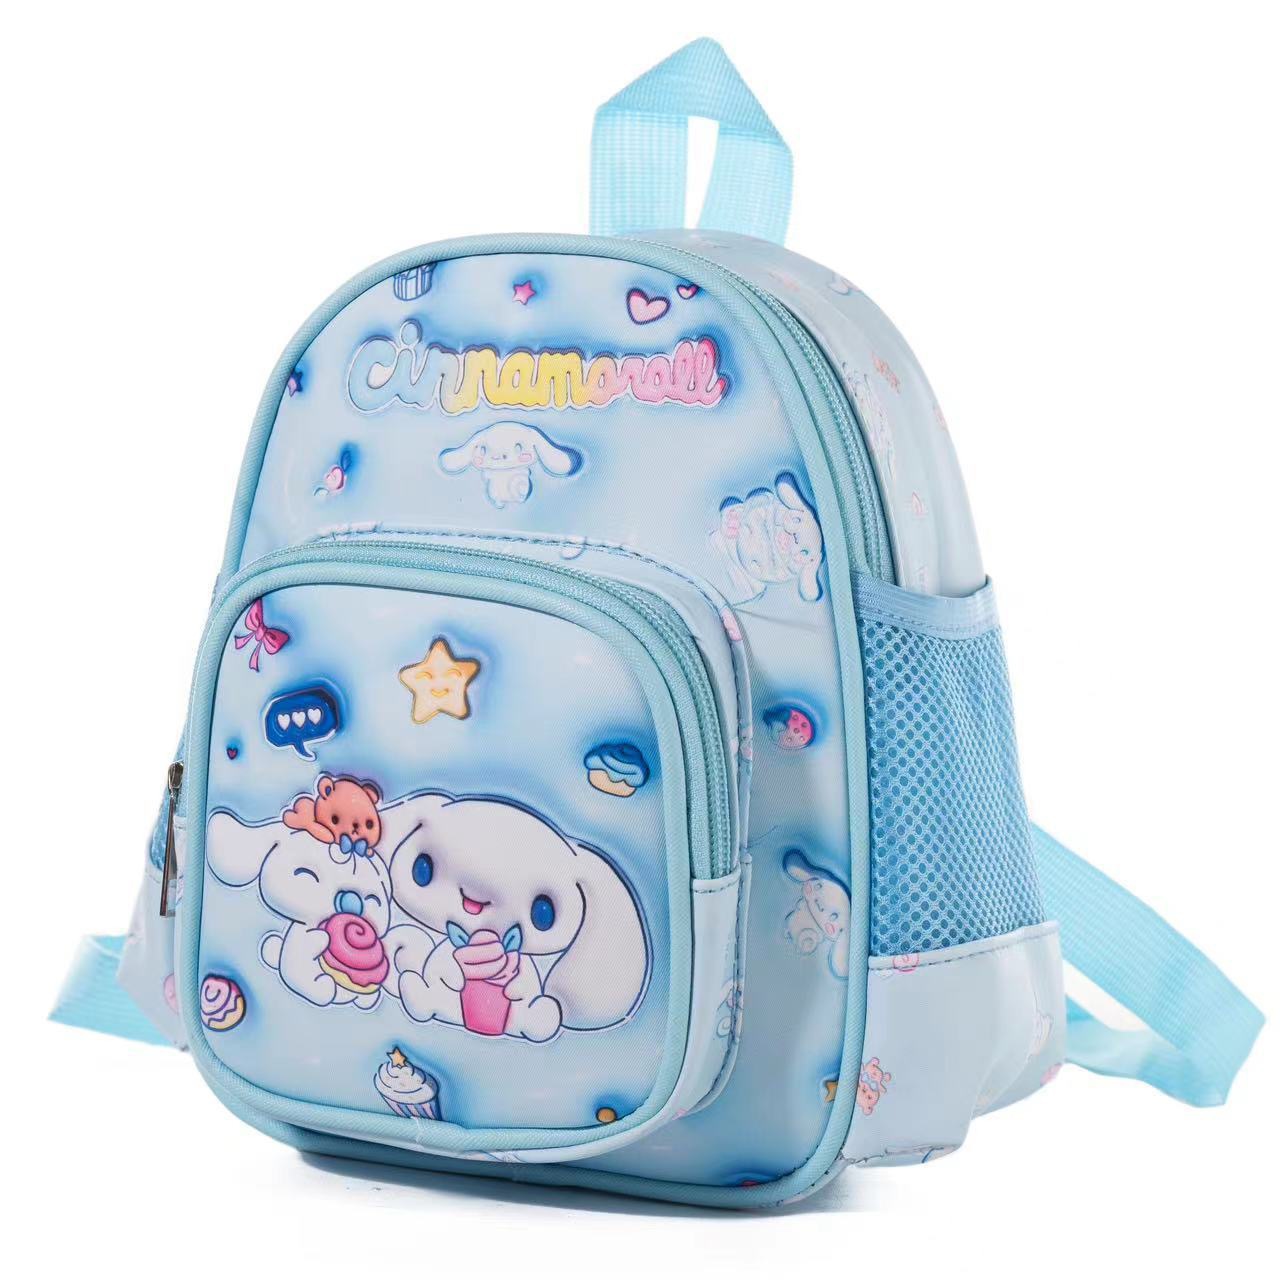 Cartoon 3d Versatile Children's Mini Schoolbag Clow M Melody Oxford Casual Backpack